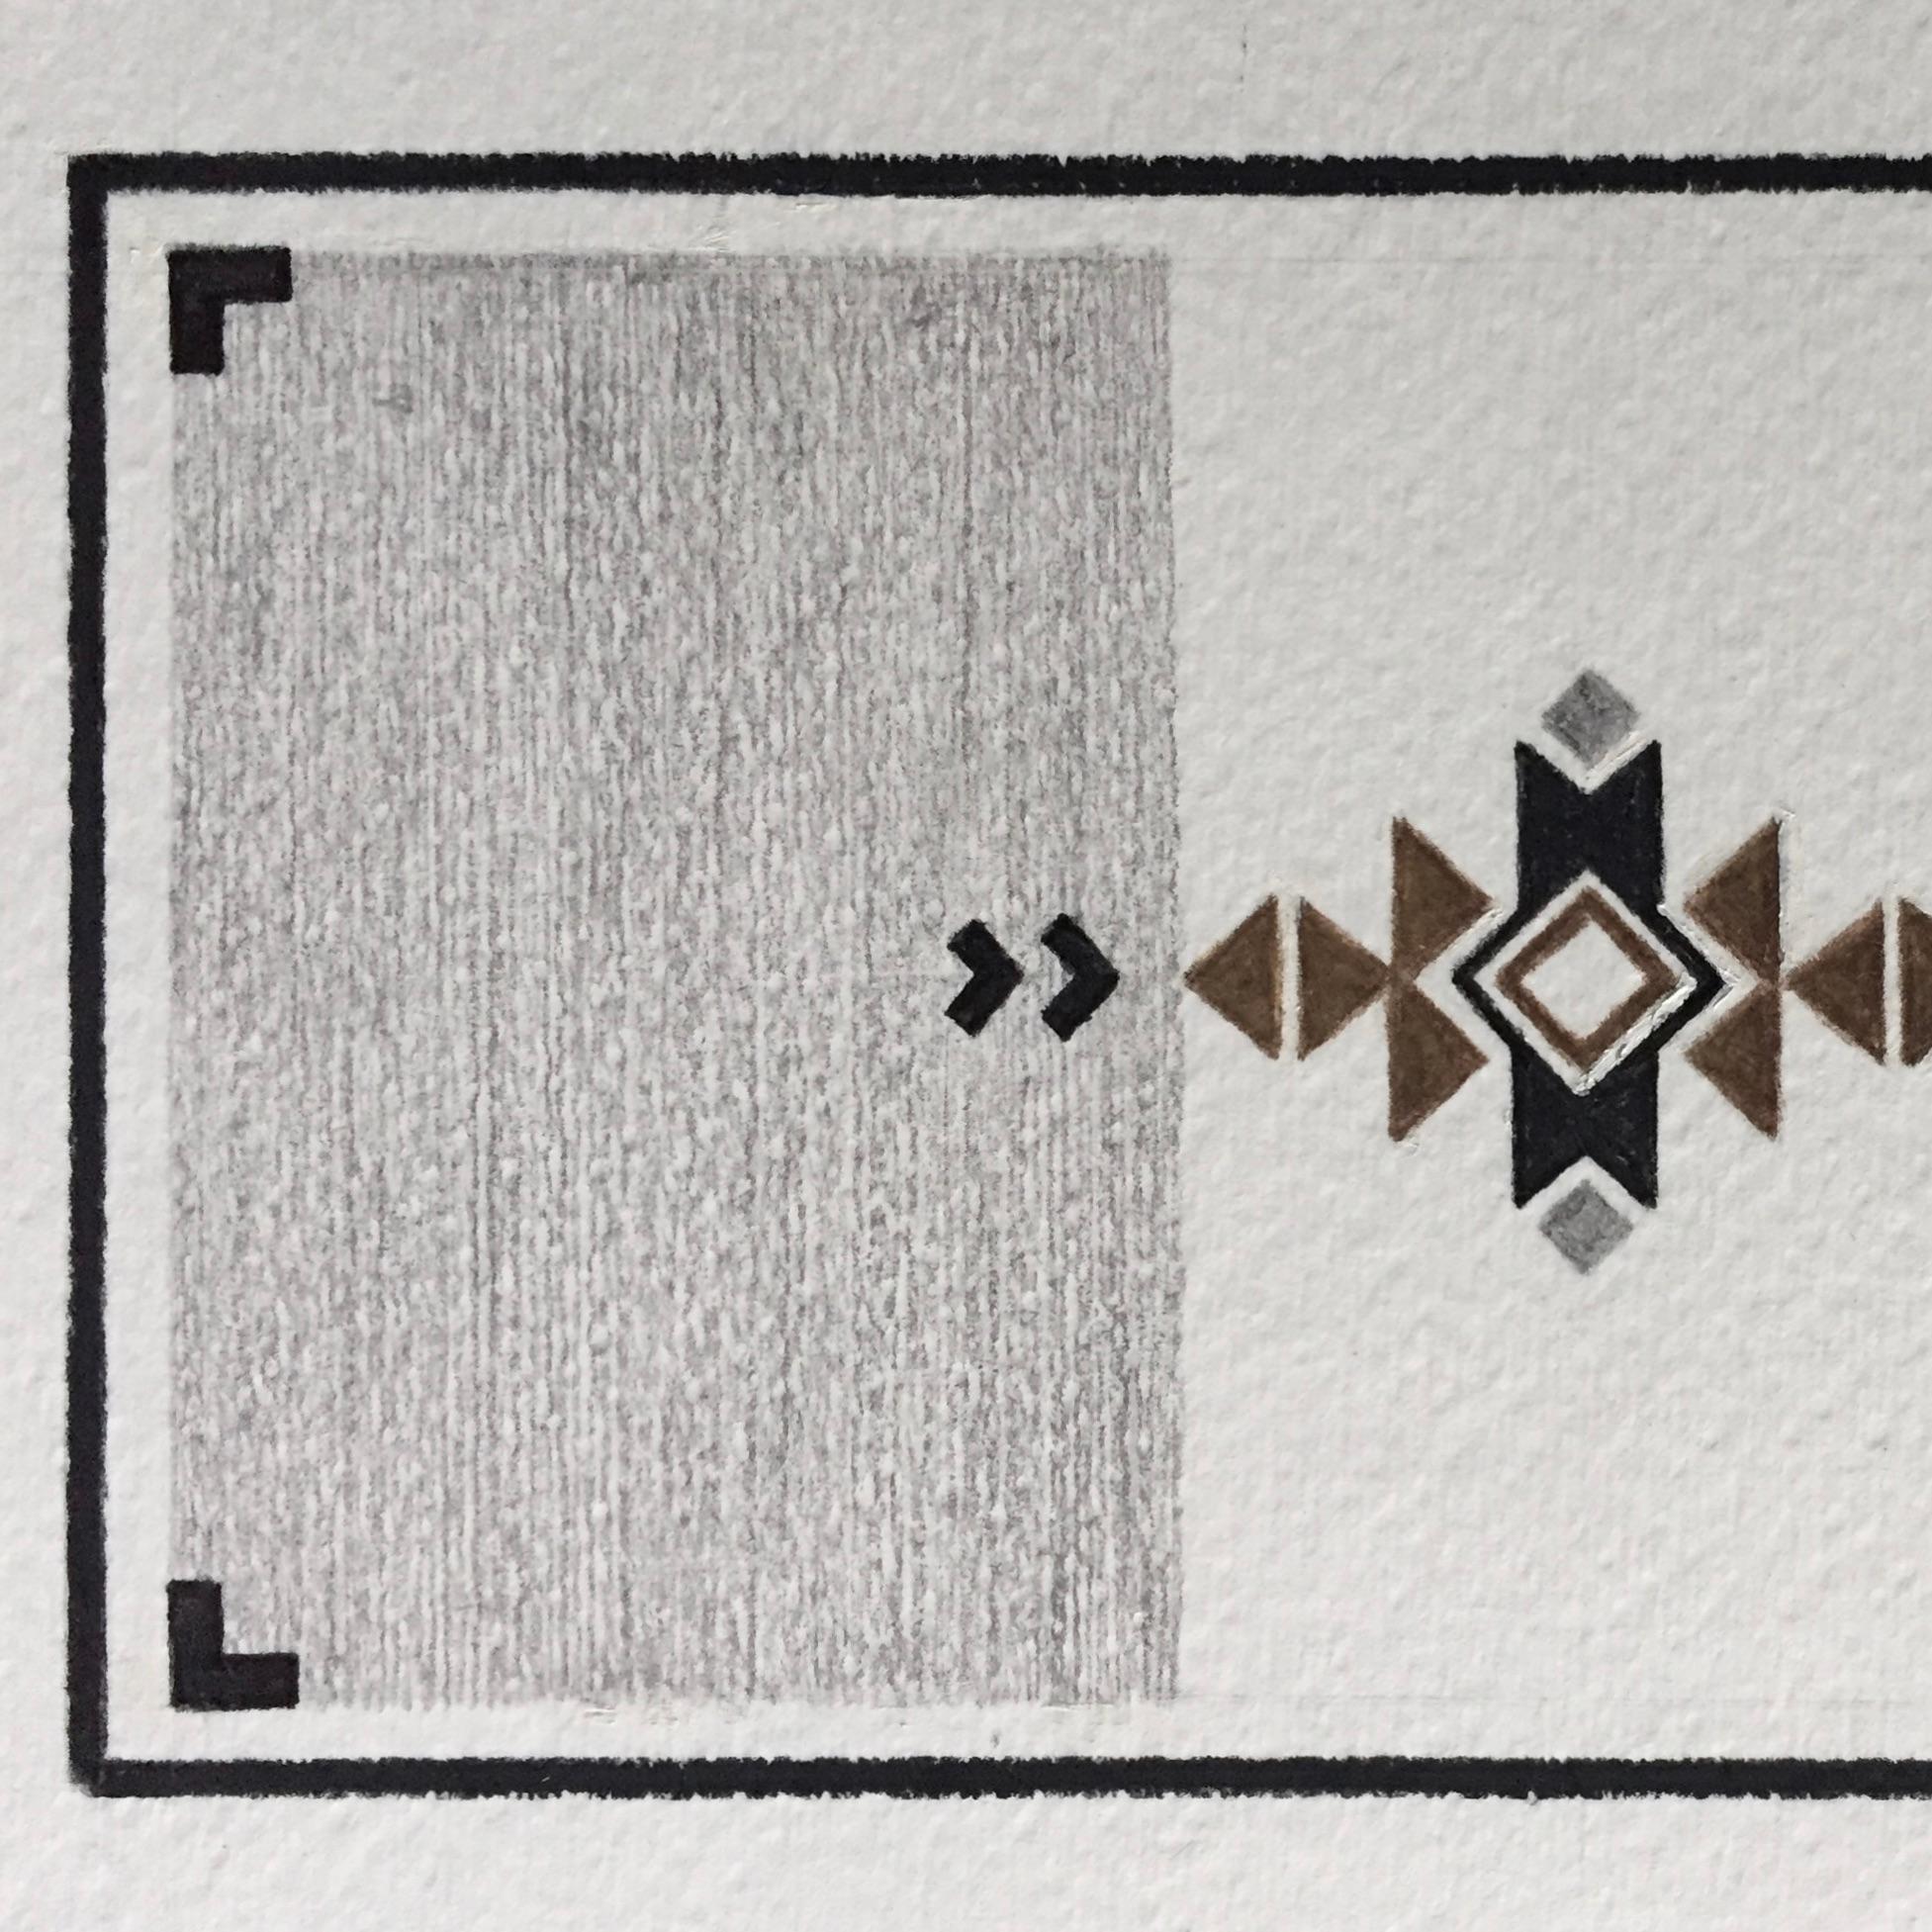 Magic Carpet Ride 4 (Navajo Inspired, Geometric Design, Black and White Artwork) For Sale 3